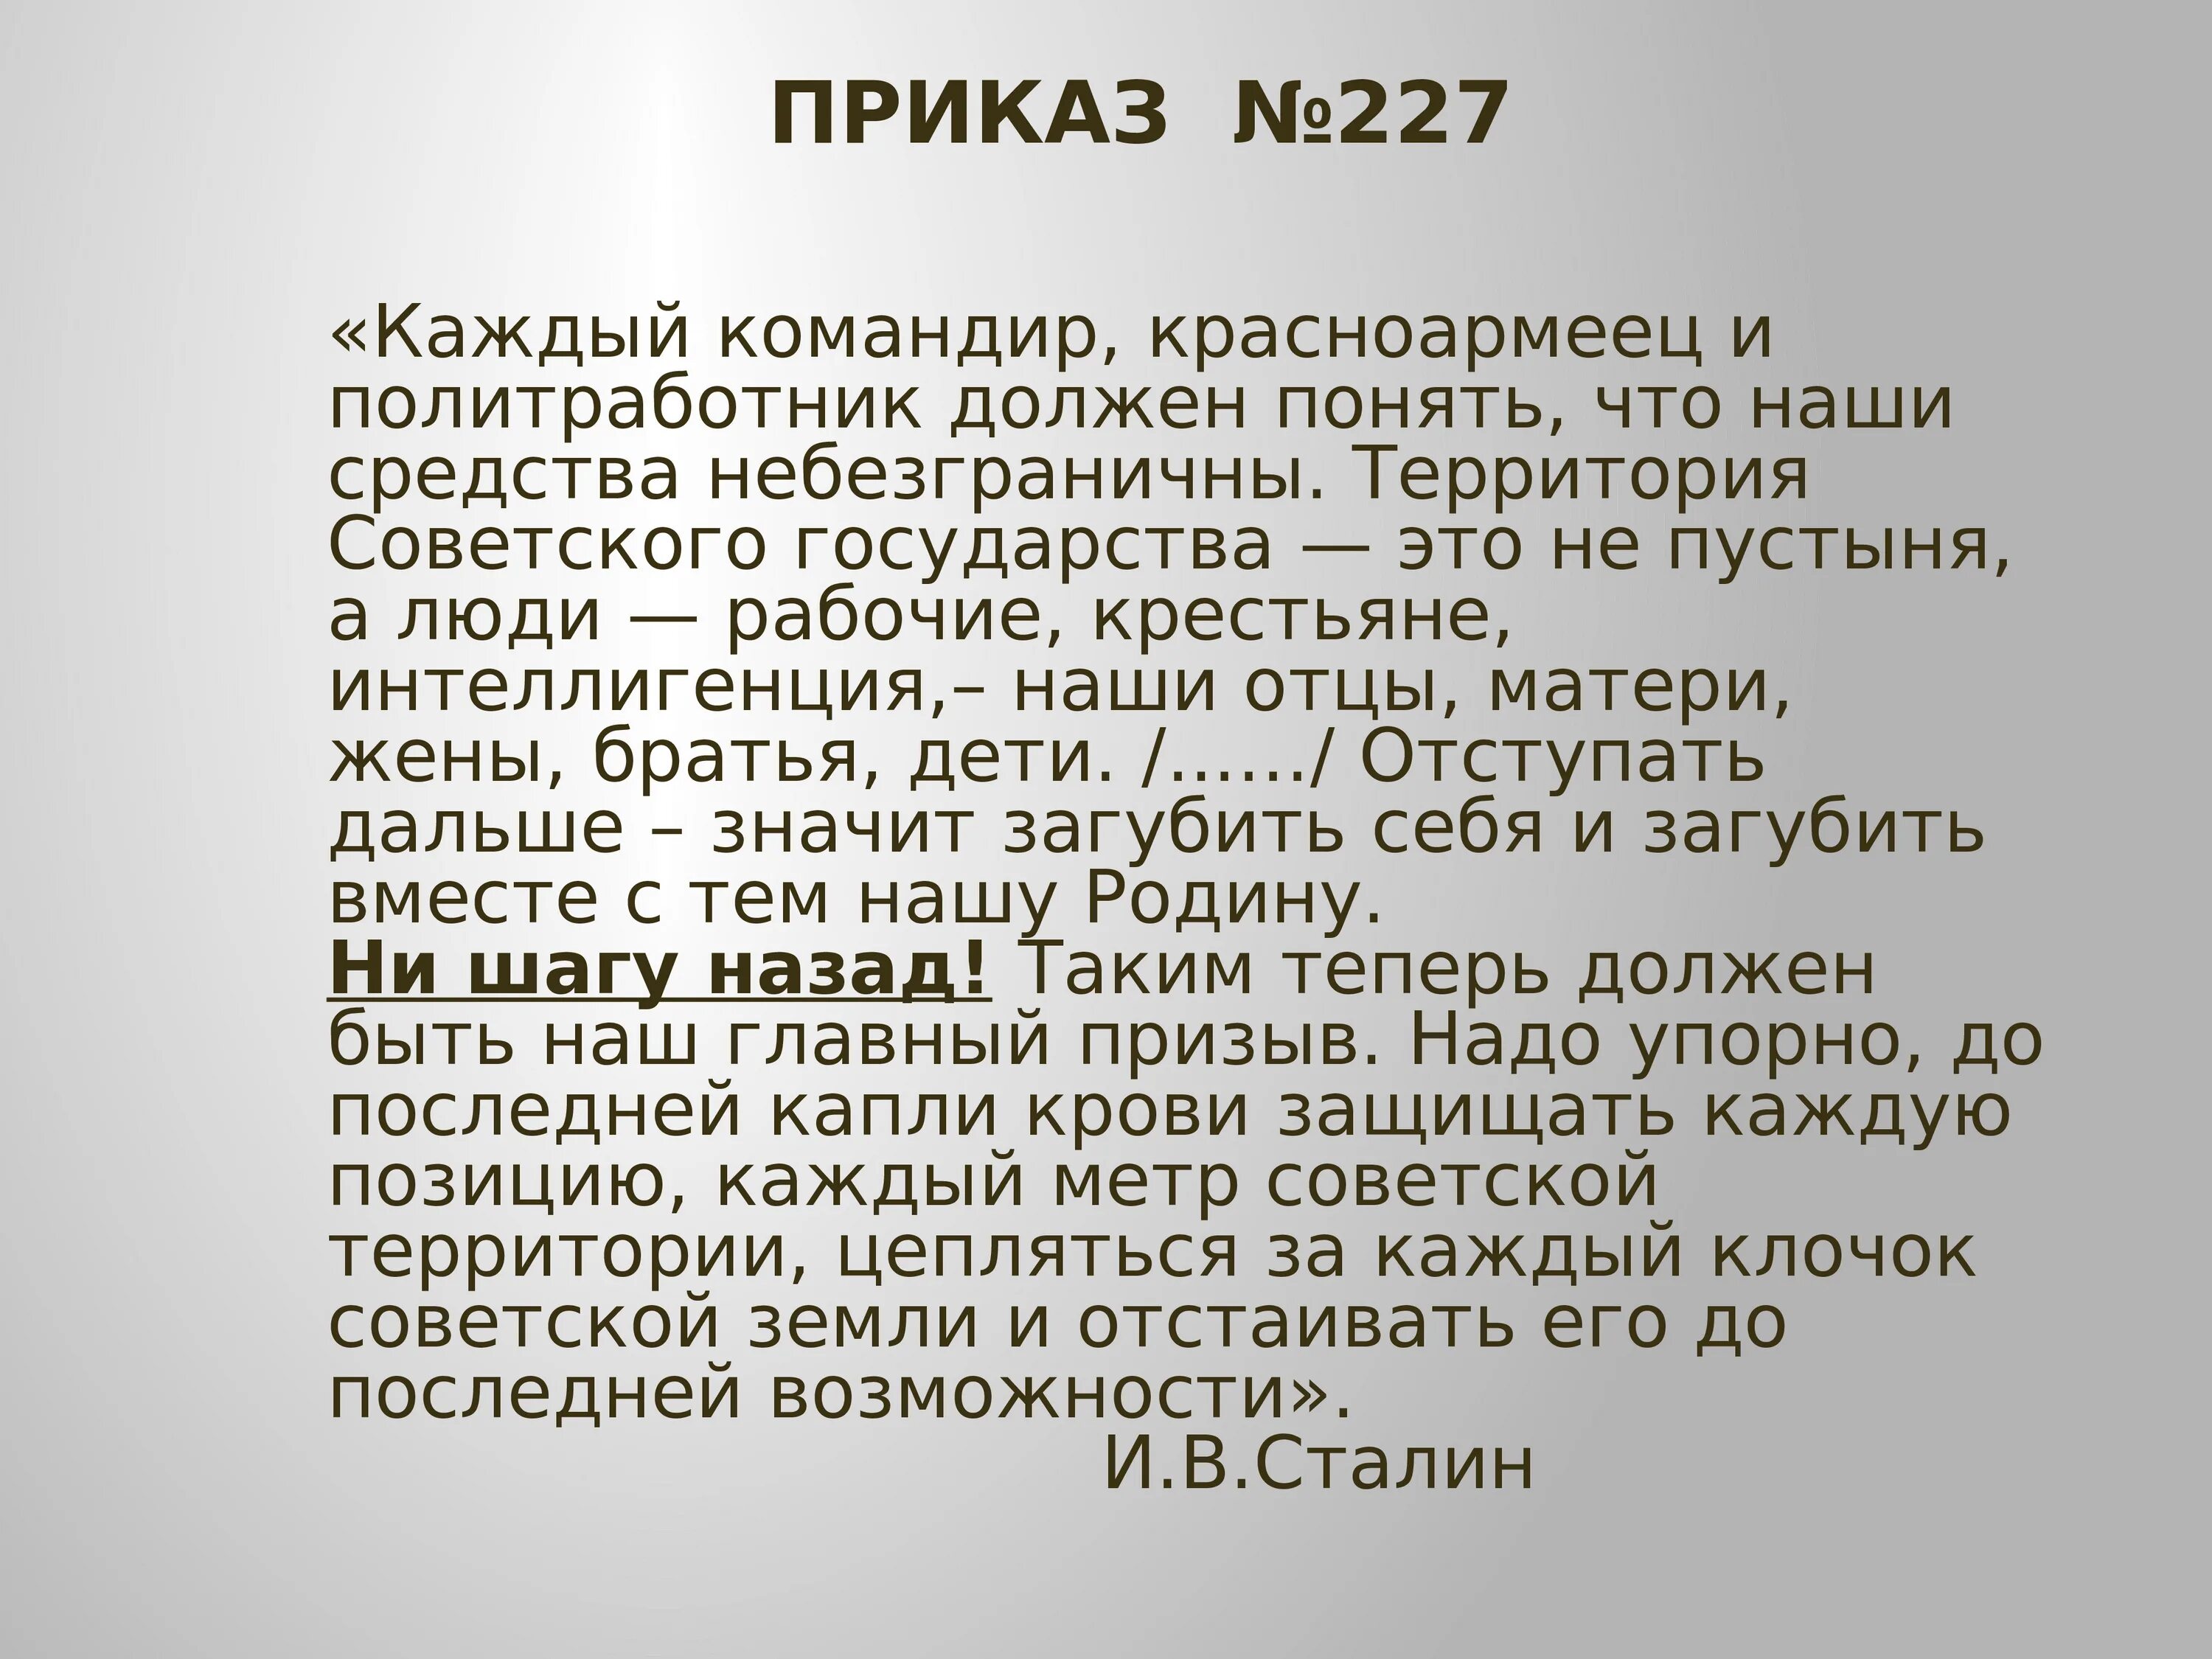 Приказ 227 Сталинградская битва. Приказ 227 ни шагу назад. Приказ 227 от 28 июля 1942 года. Приказ Сталина 227.